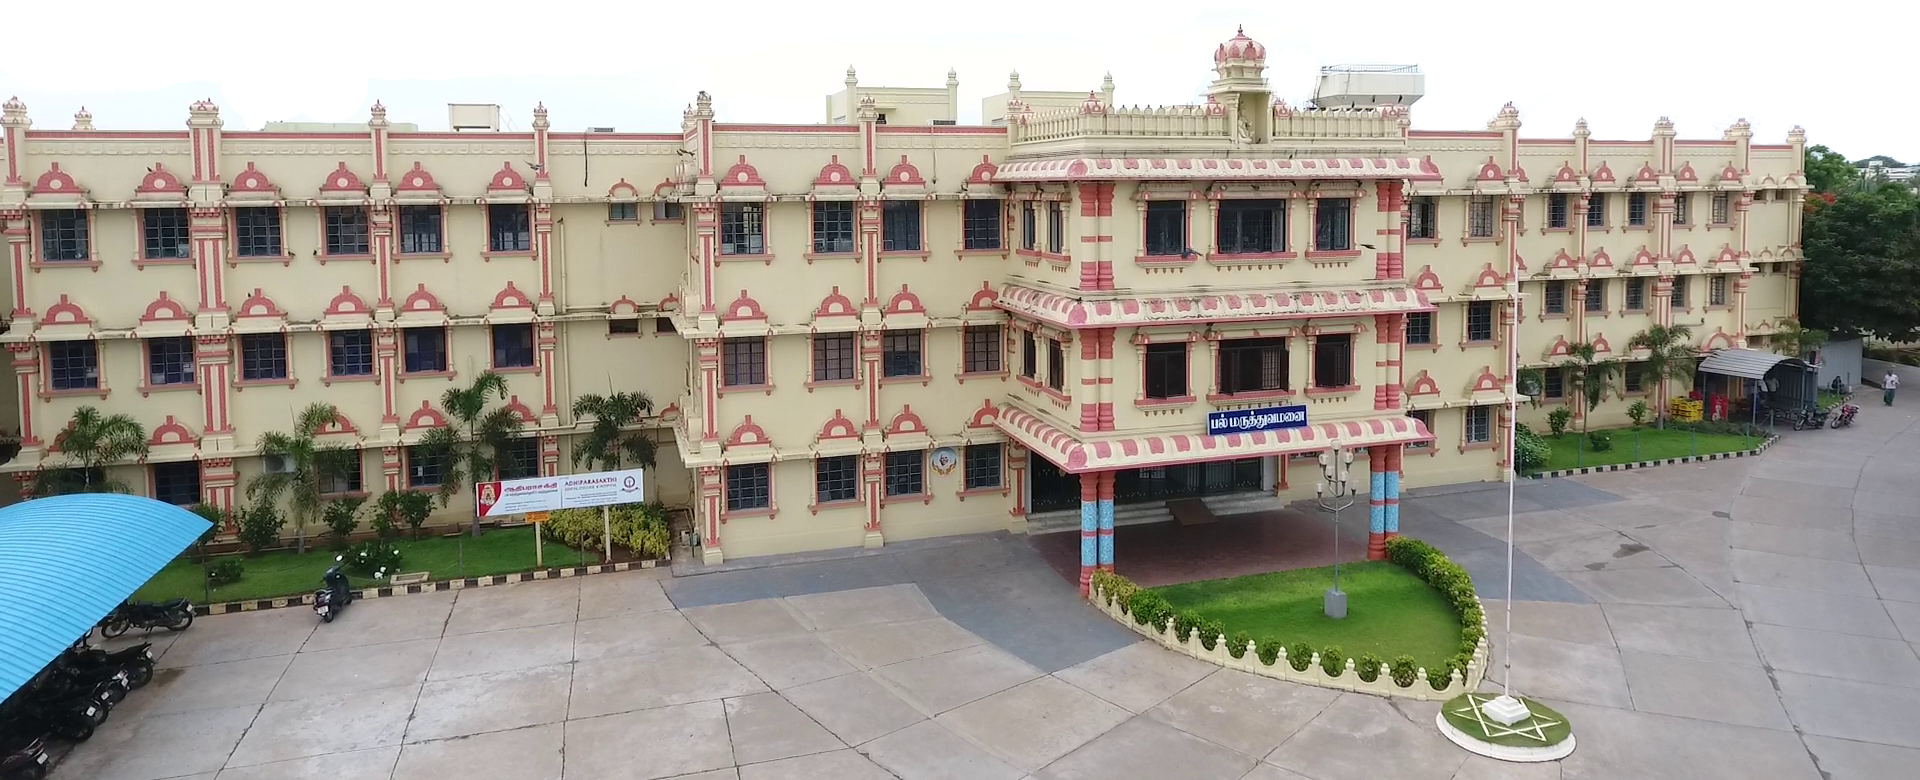 Adhiparasakthi Dental College and Hospital, Melmaruvathur Image